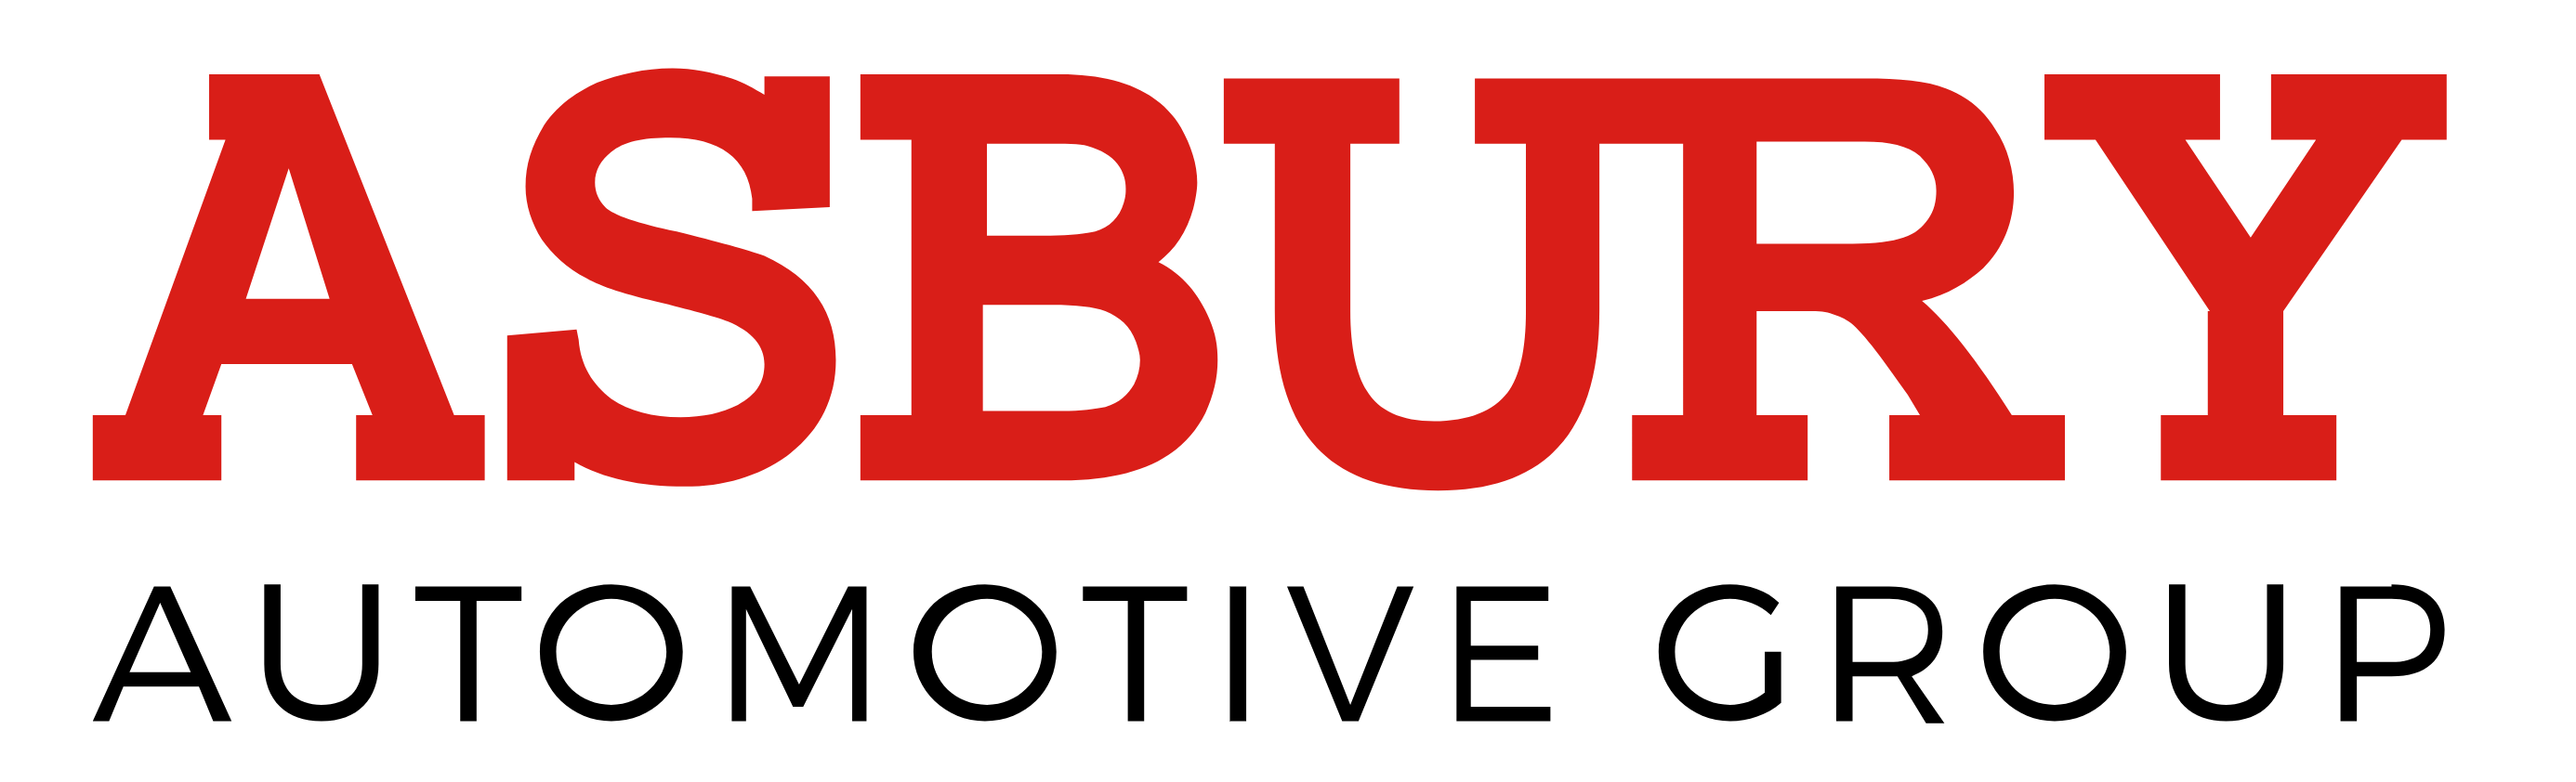 Red Oval Automotive Logo - Asbury Automotive Group Potentially Undervalued Despite